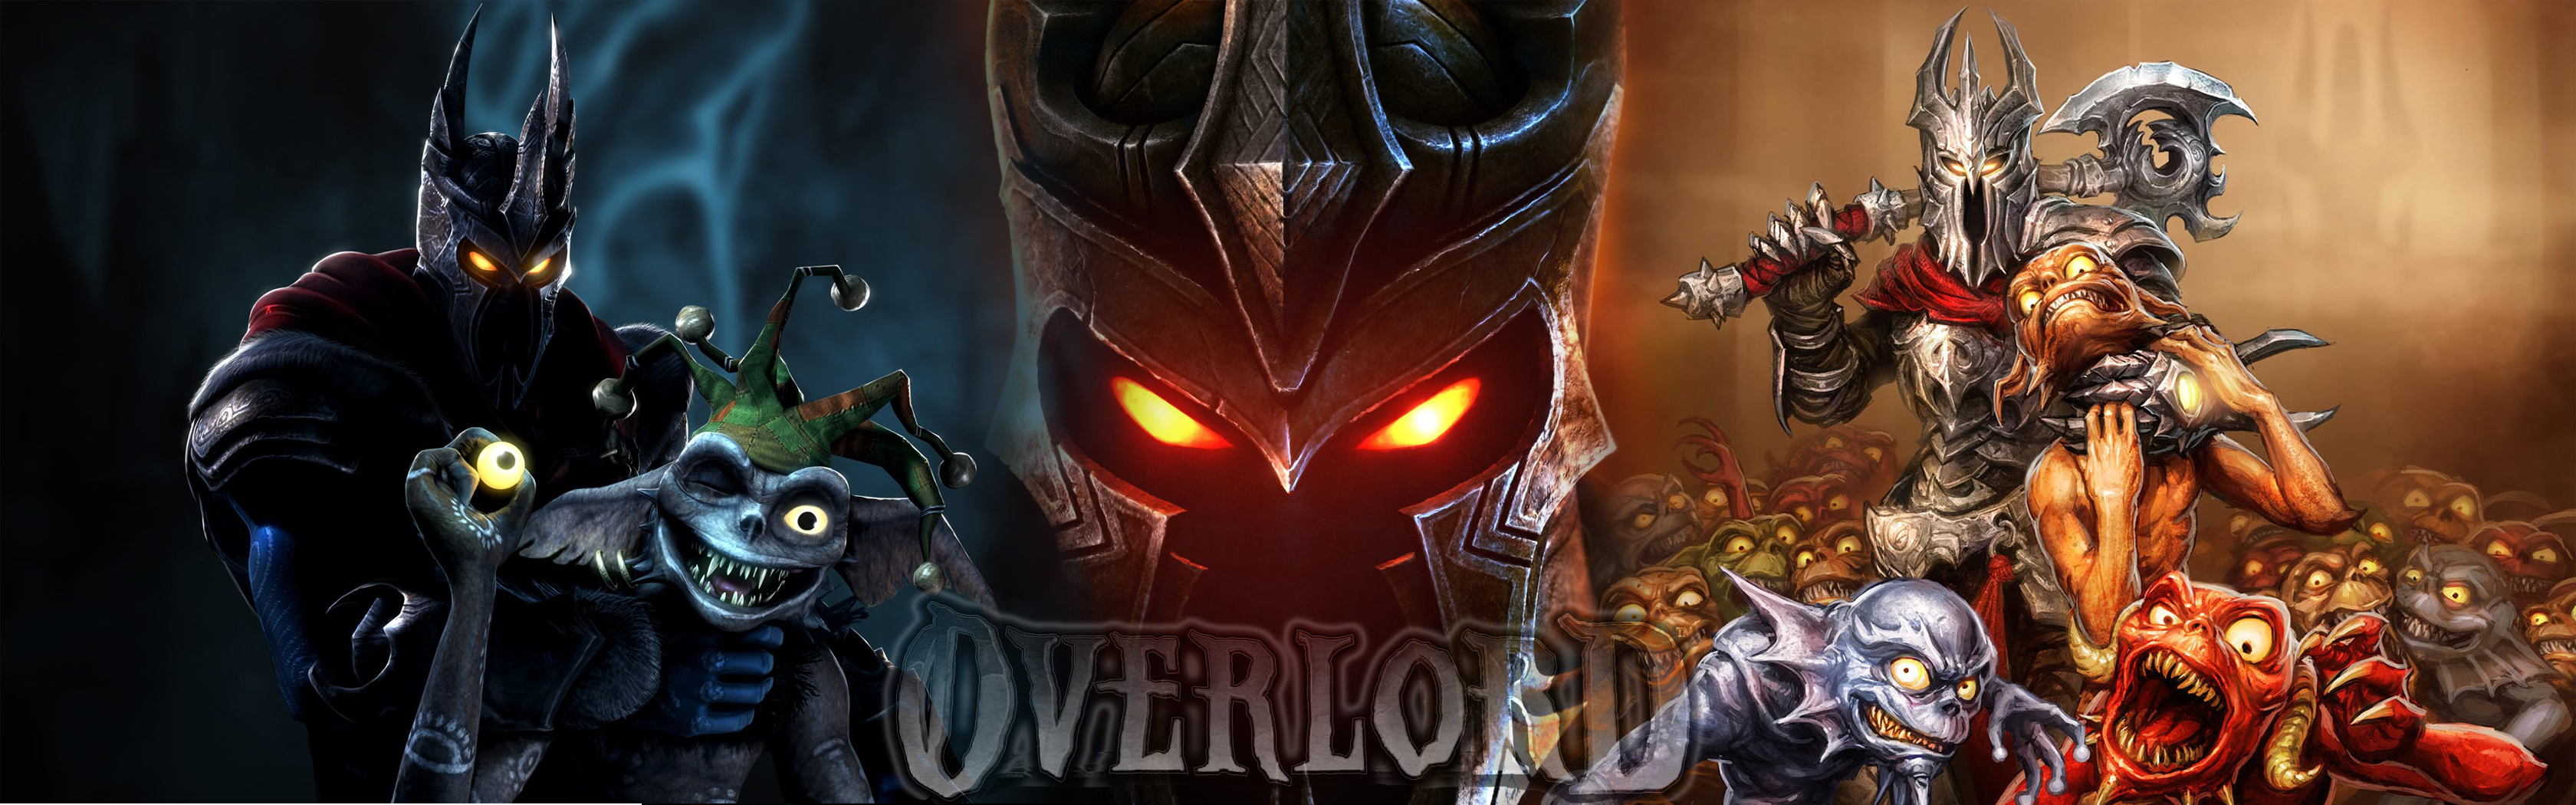 Overlord fellowship of evil стим фото 110